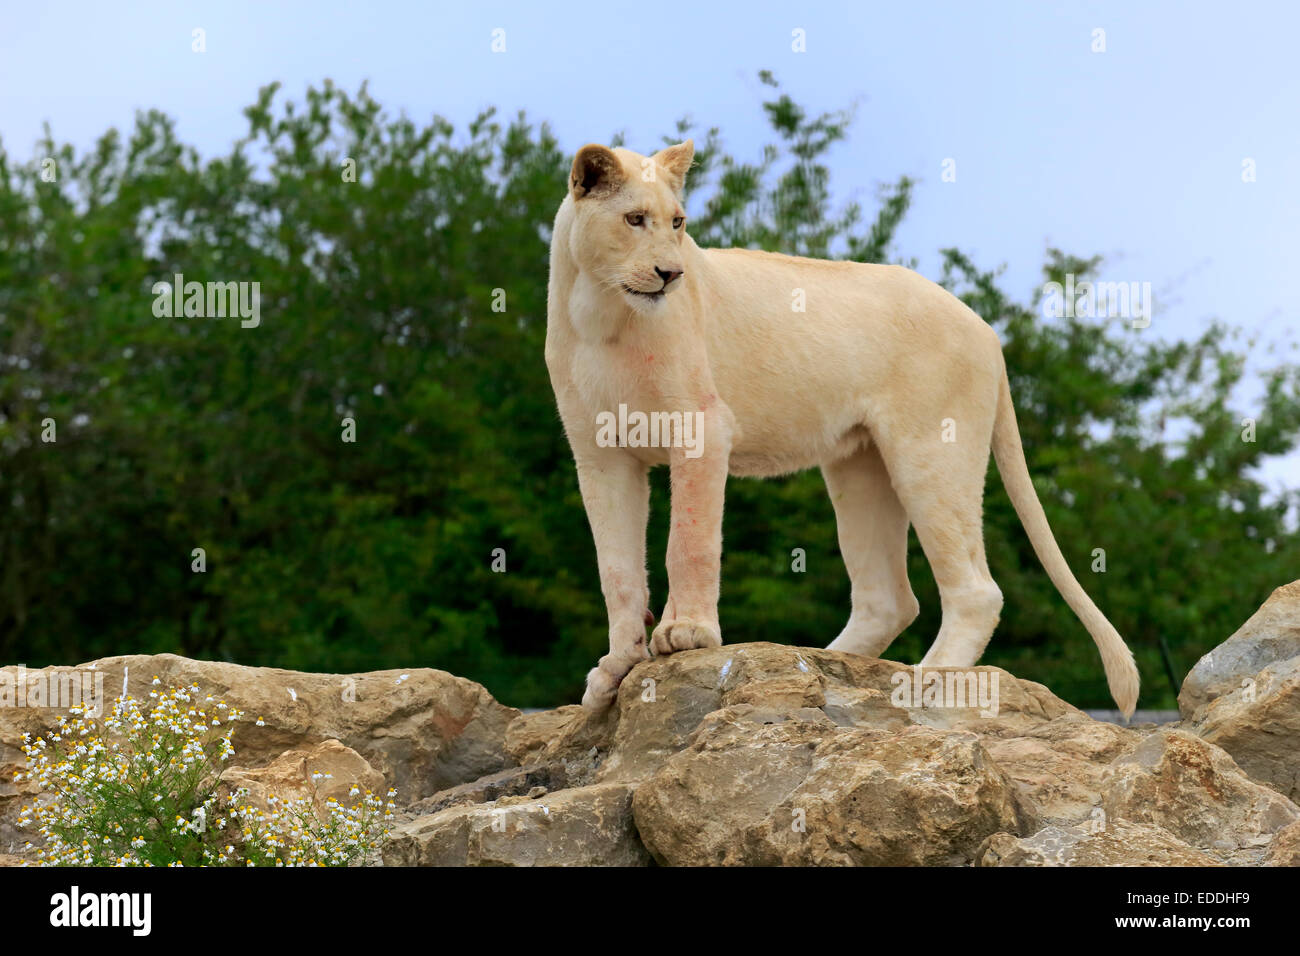 Adult White Lion 117